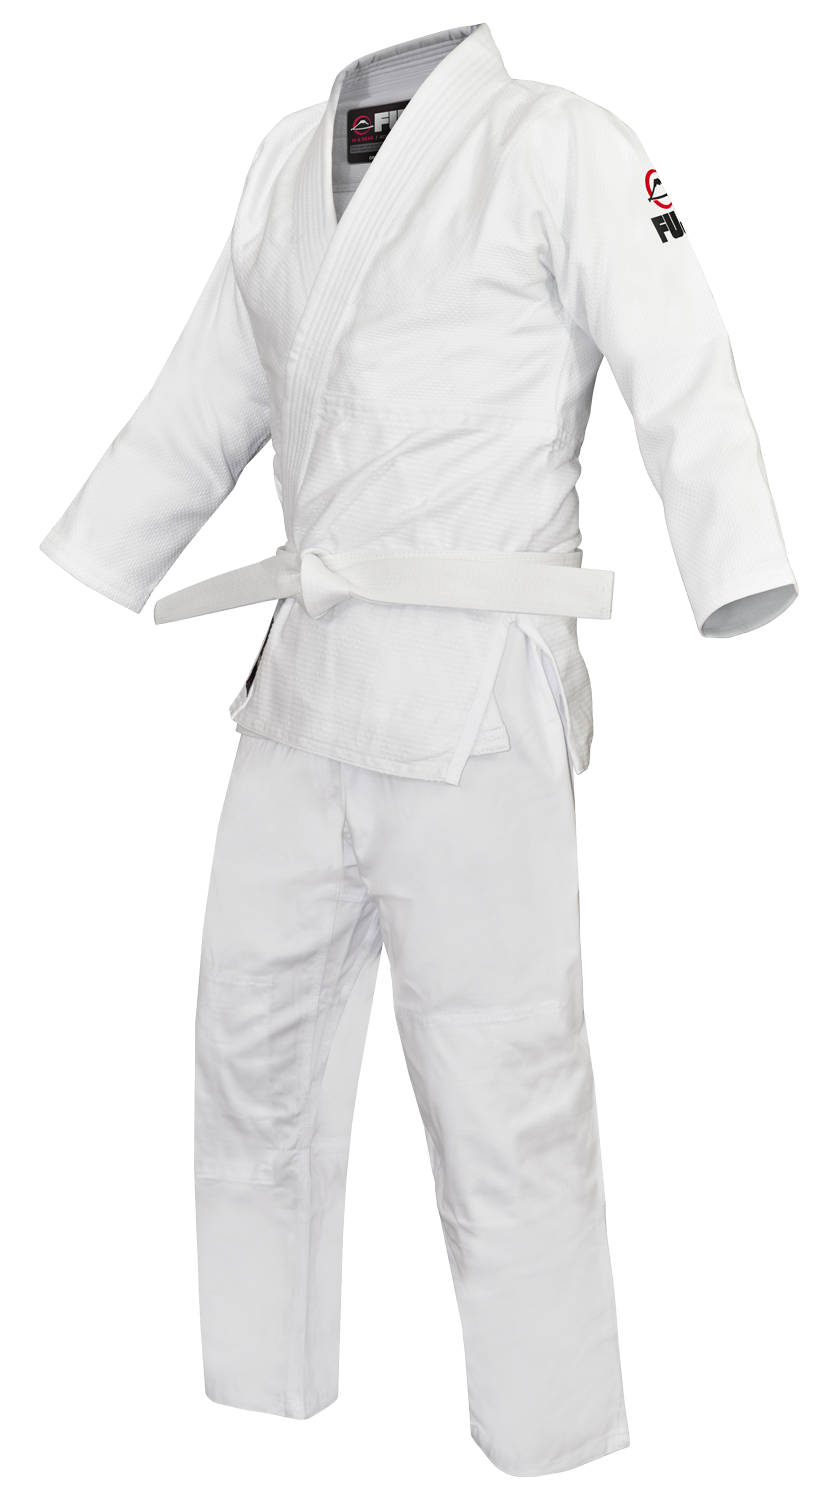 Judogi Uniform PNG Image HD